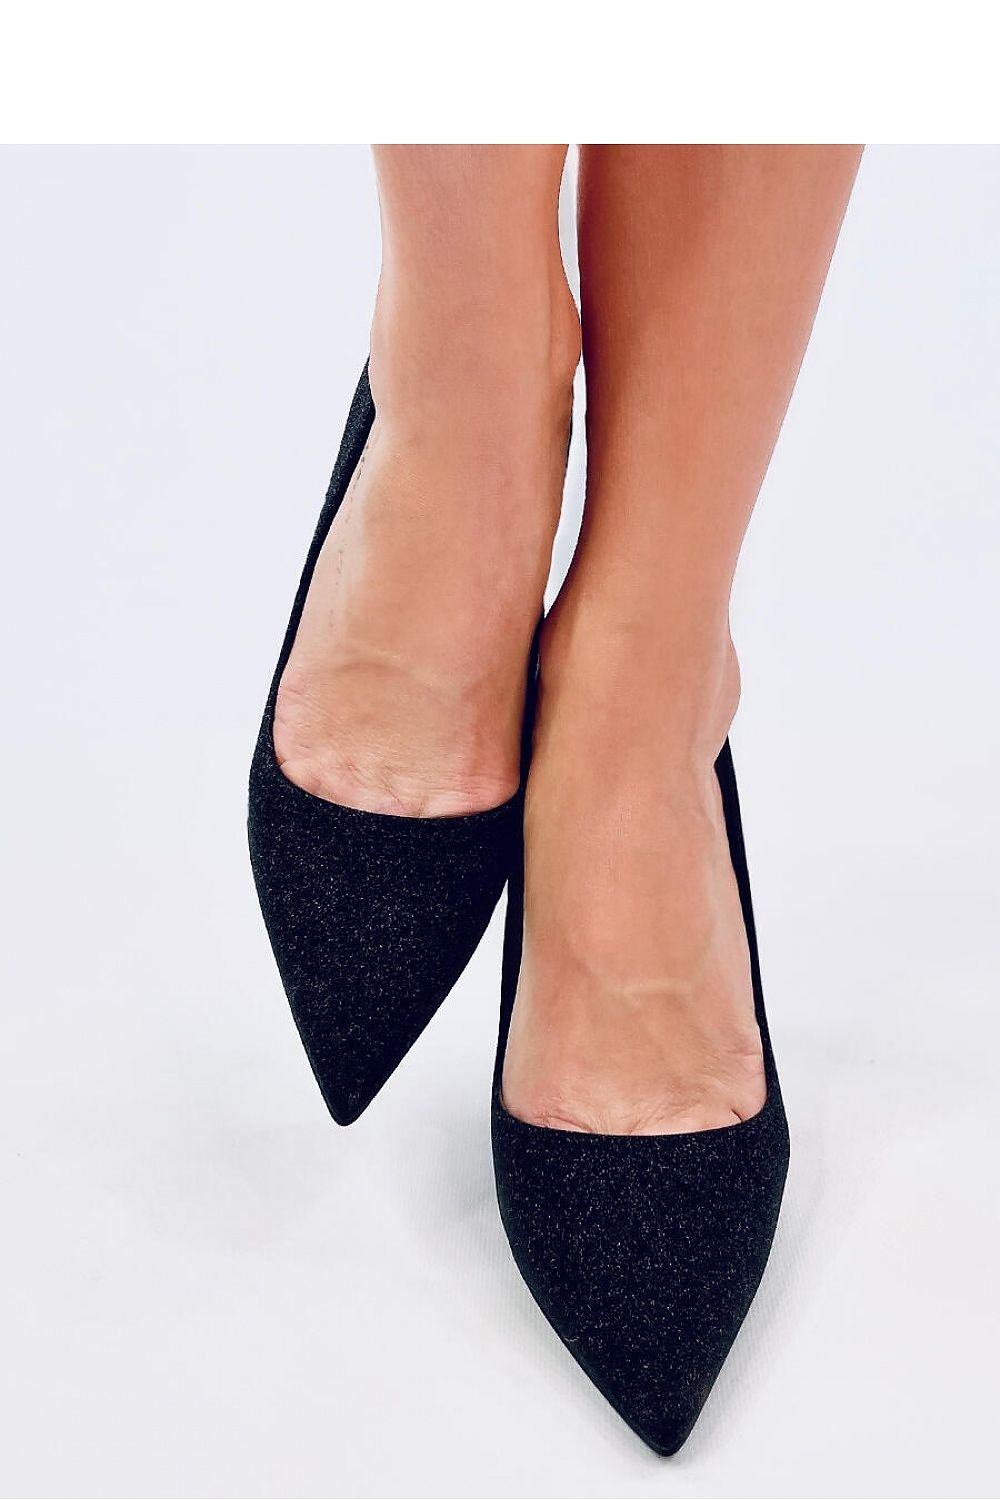 Women Black Color Metallic Stiletto High heels - Venus Trendy Fashion Online